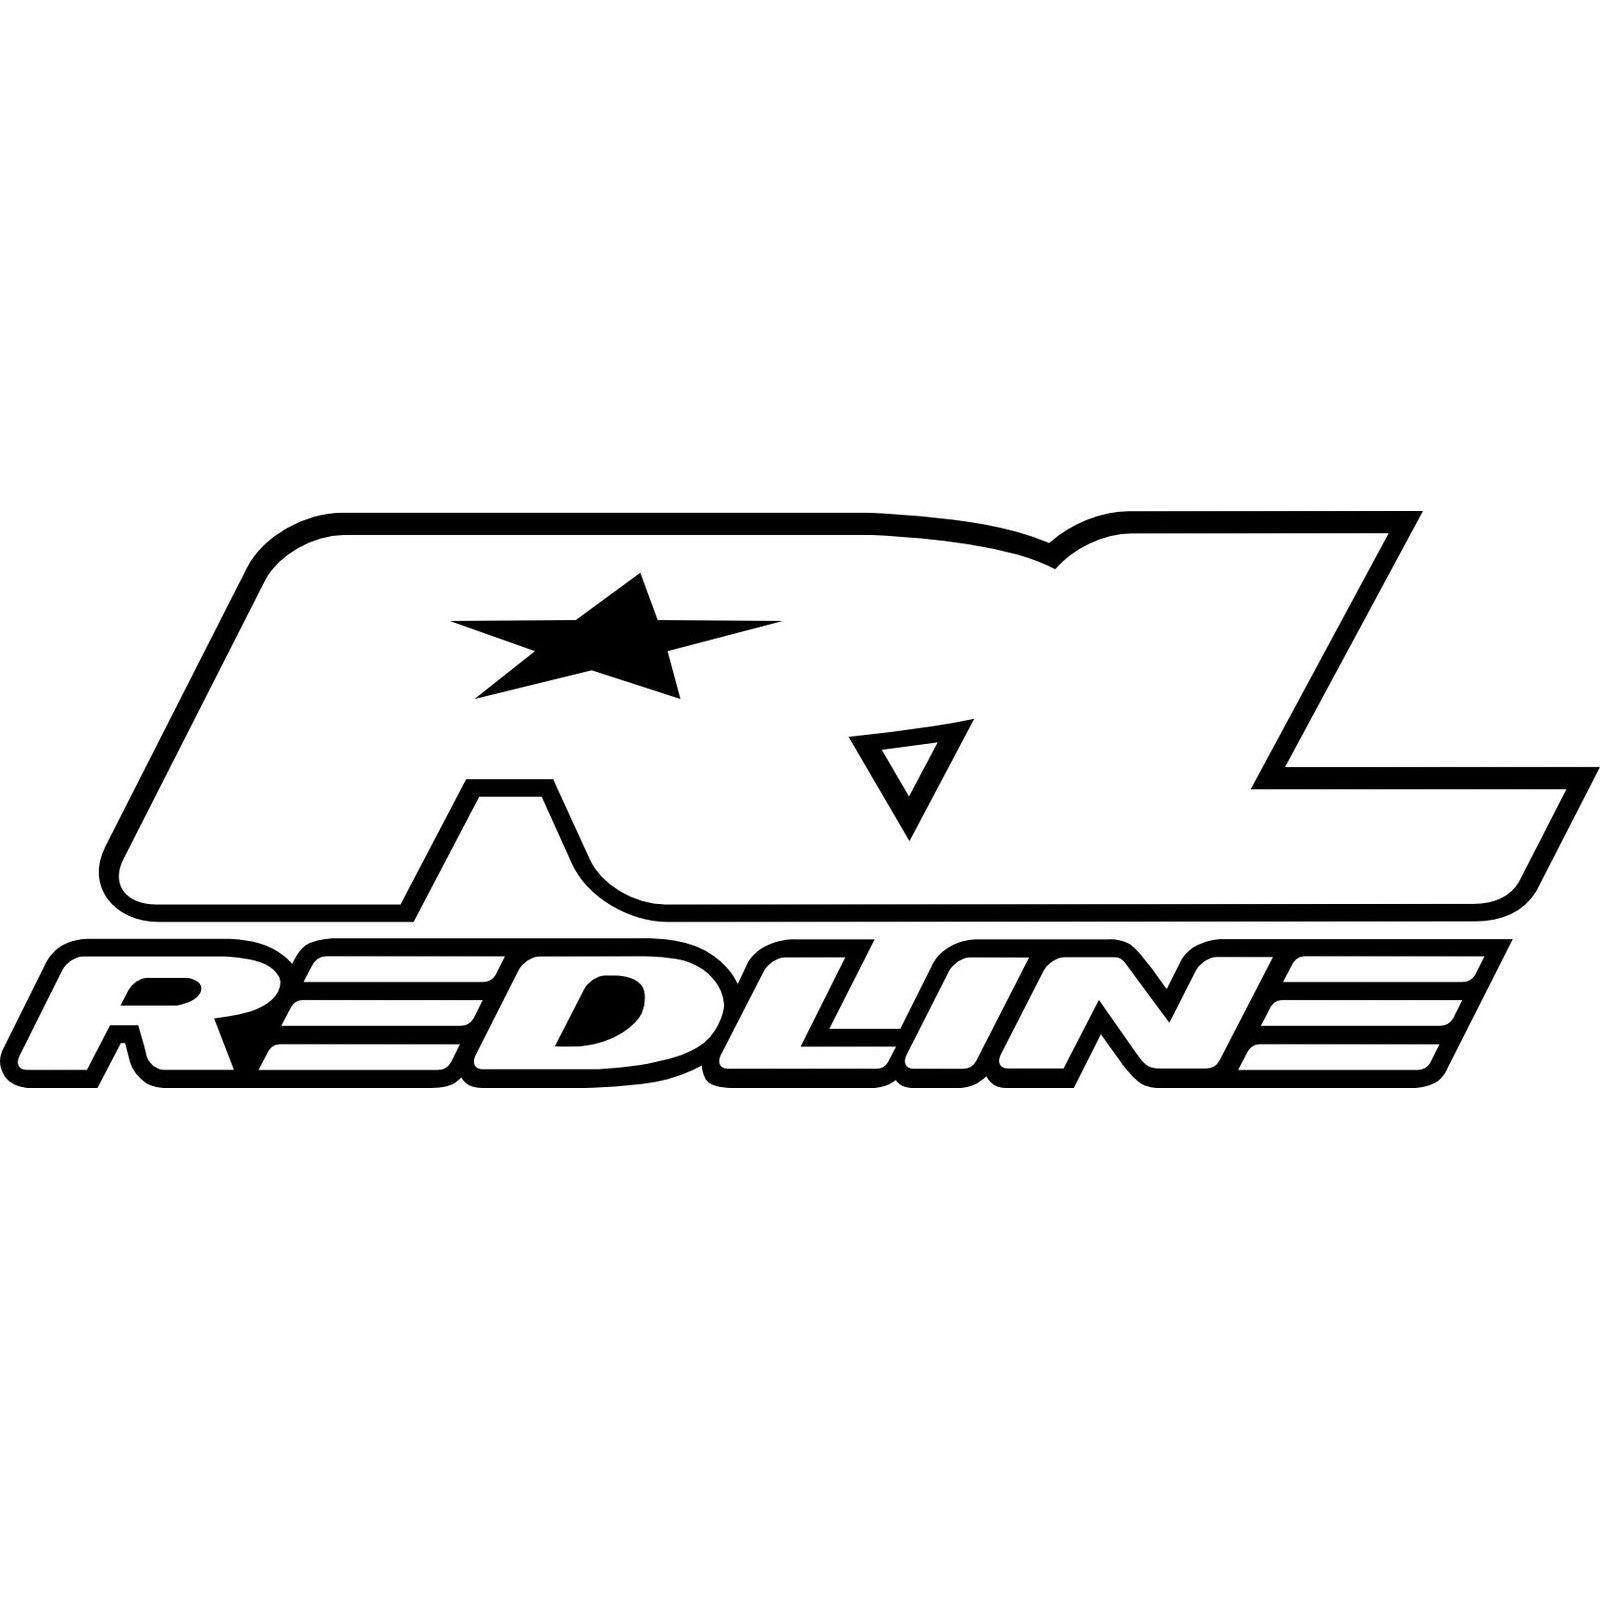 White with Red Line Logo - Redline Logo Car Van Window Decal